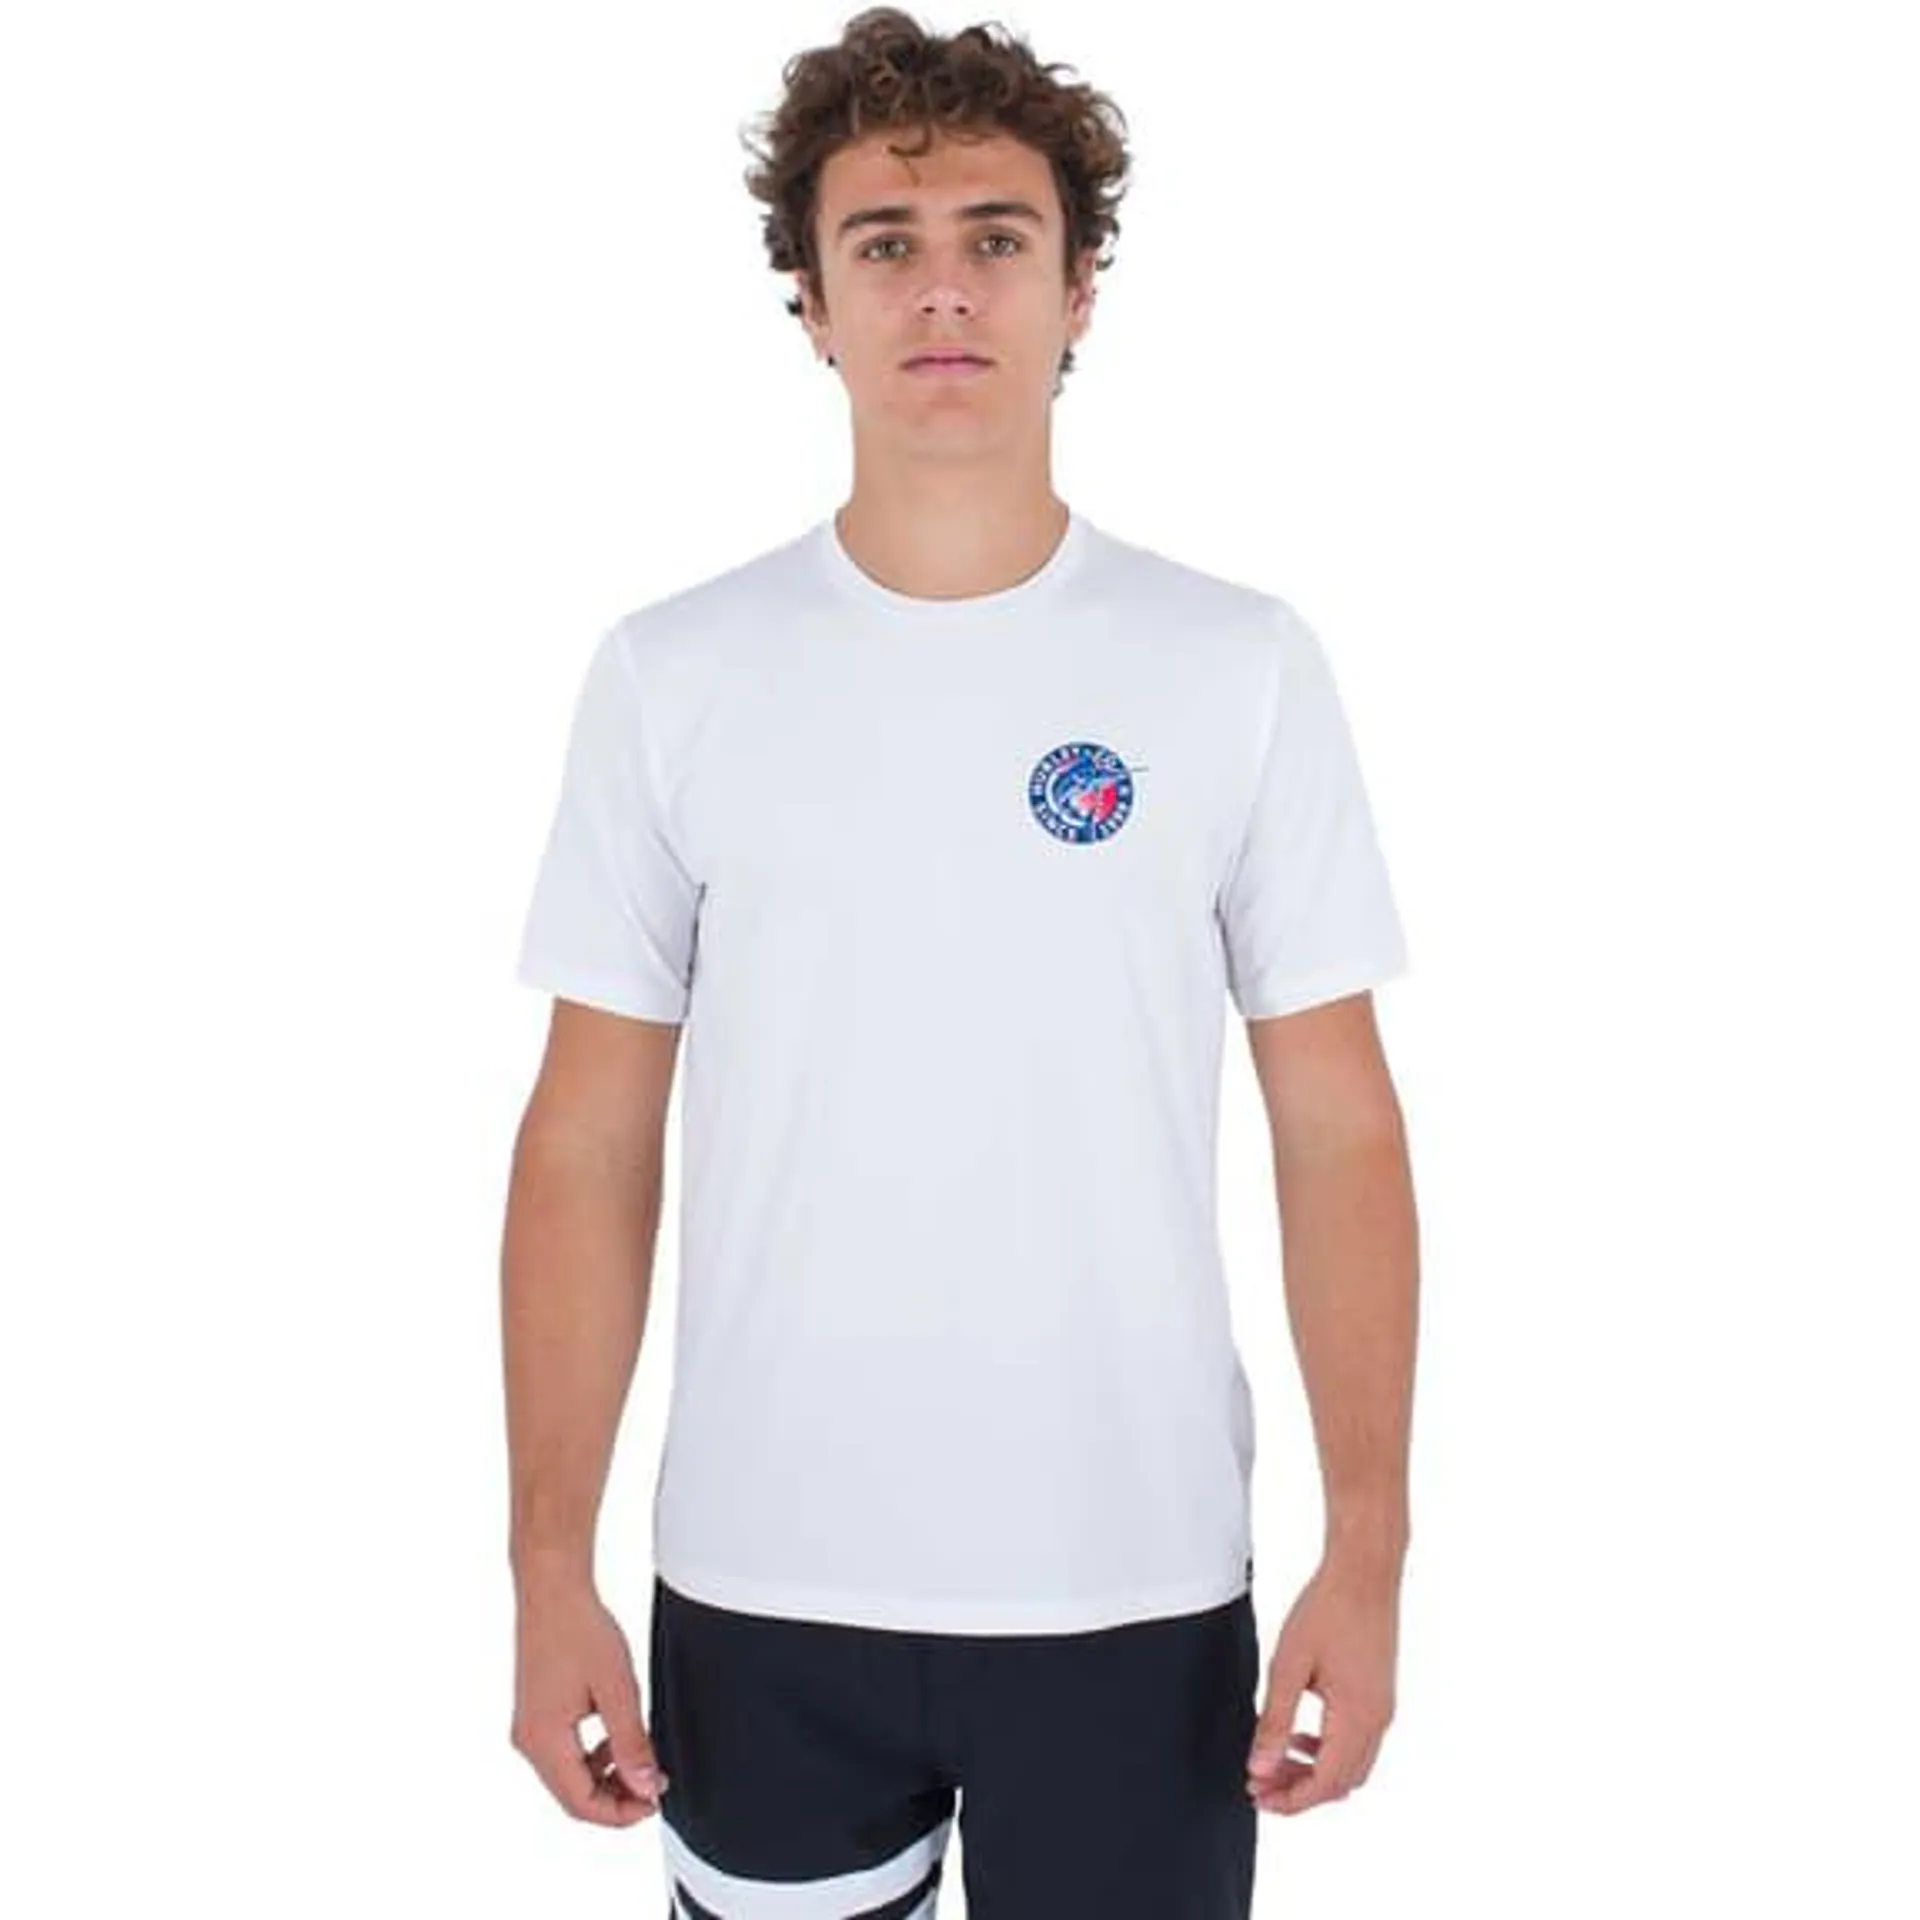 T-shirt Hurley Everyday Hybrid manche courte blanc bleu rouge